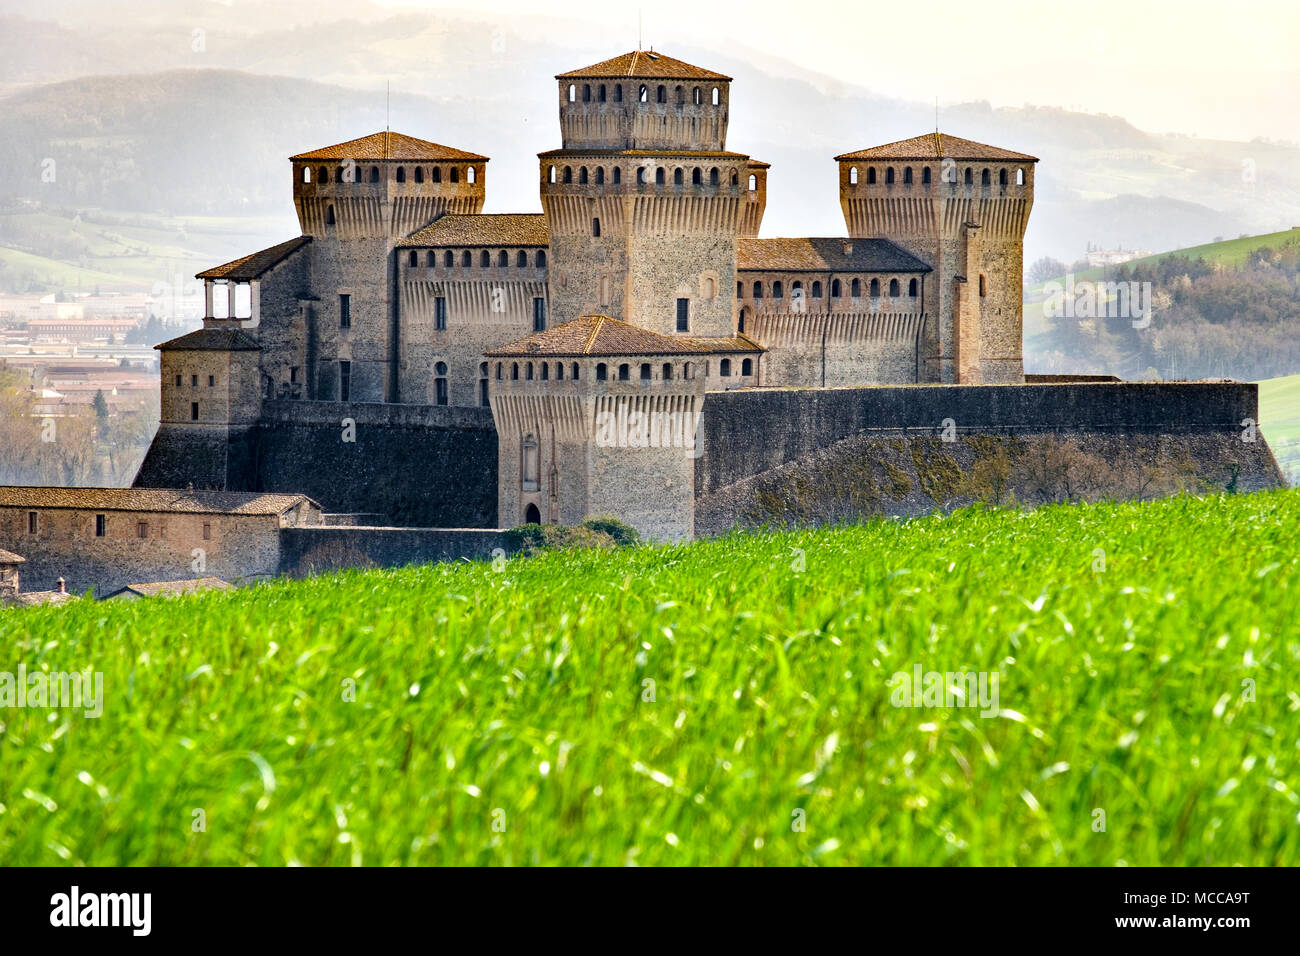 Parma - Italien - Schloss von Torrechiara Wiese vale Panorama - Emilia Romagna Stockfoto